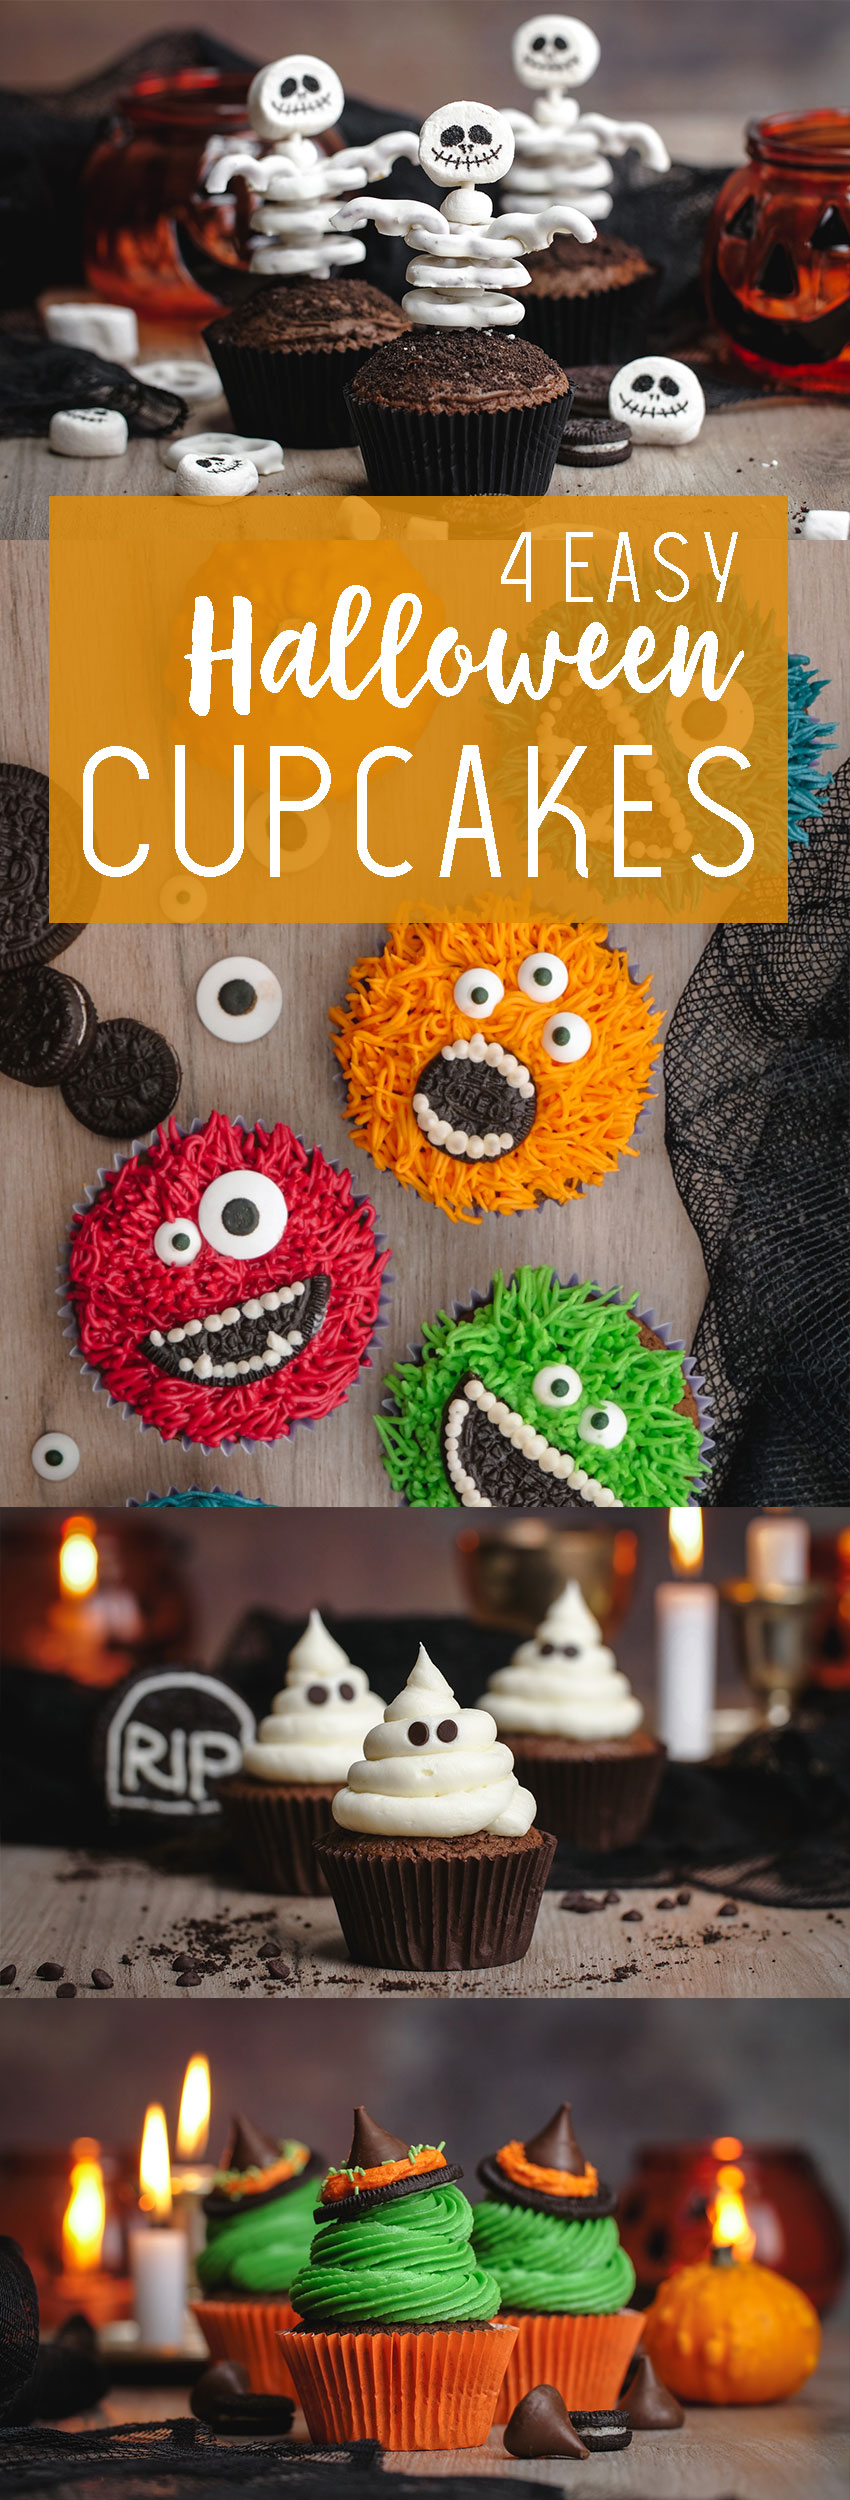 Halloween Cupcakes- 4 easy ideas for super cute Halloween cupcakes